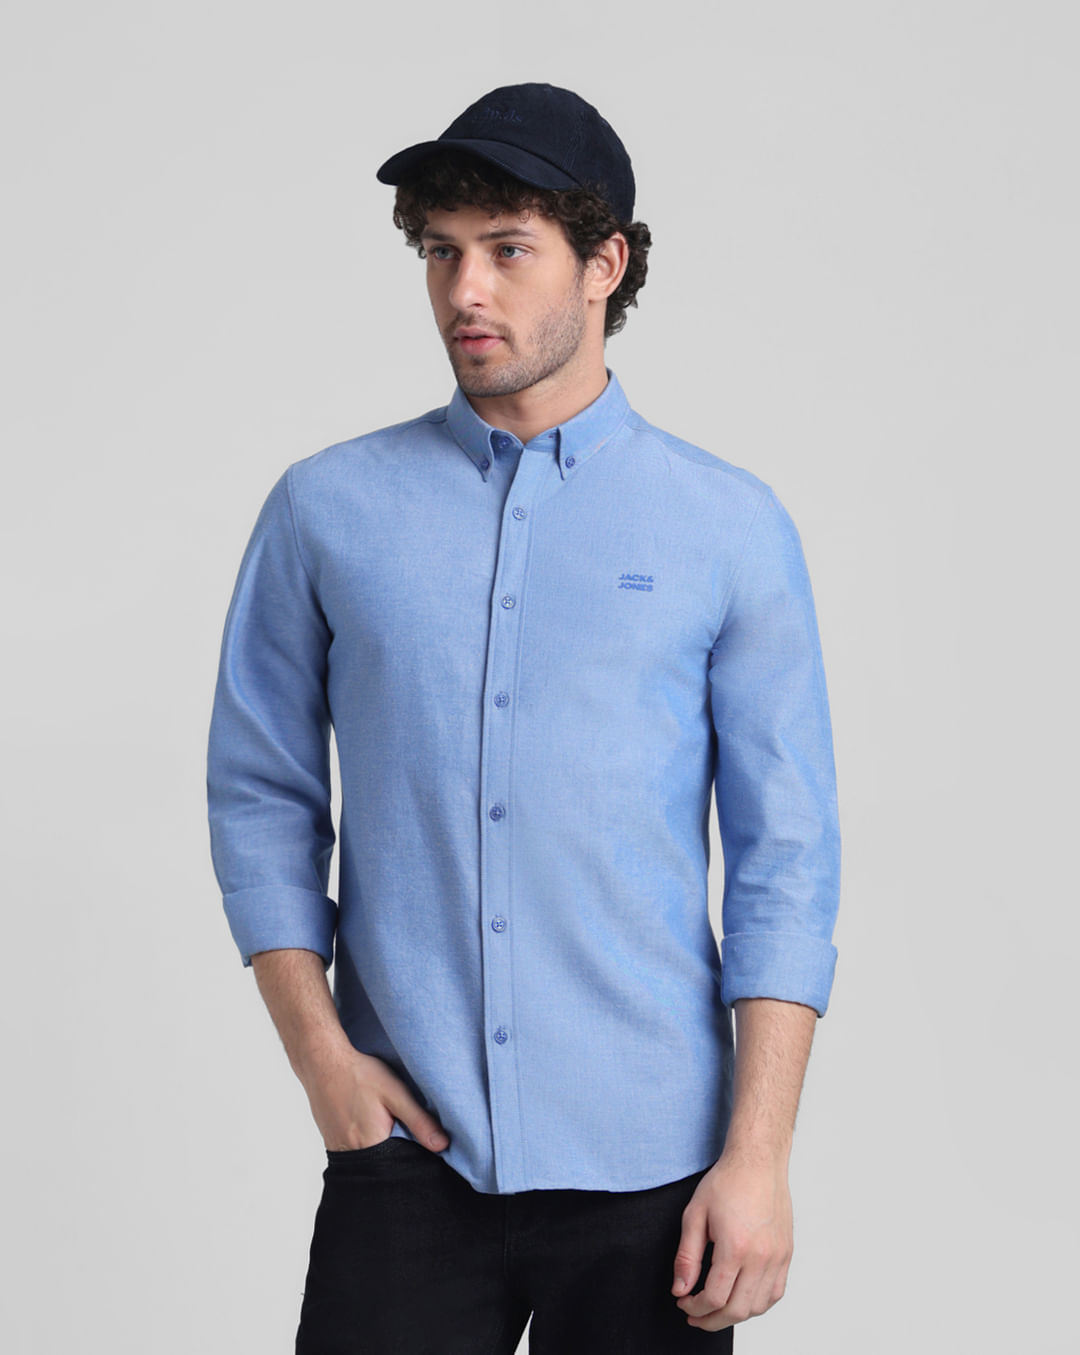 Blue Cotton Full Sleeves Shirt